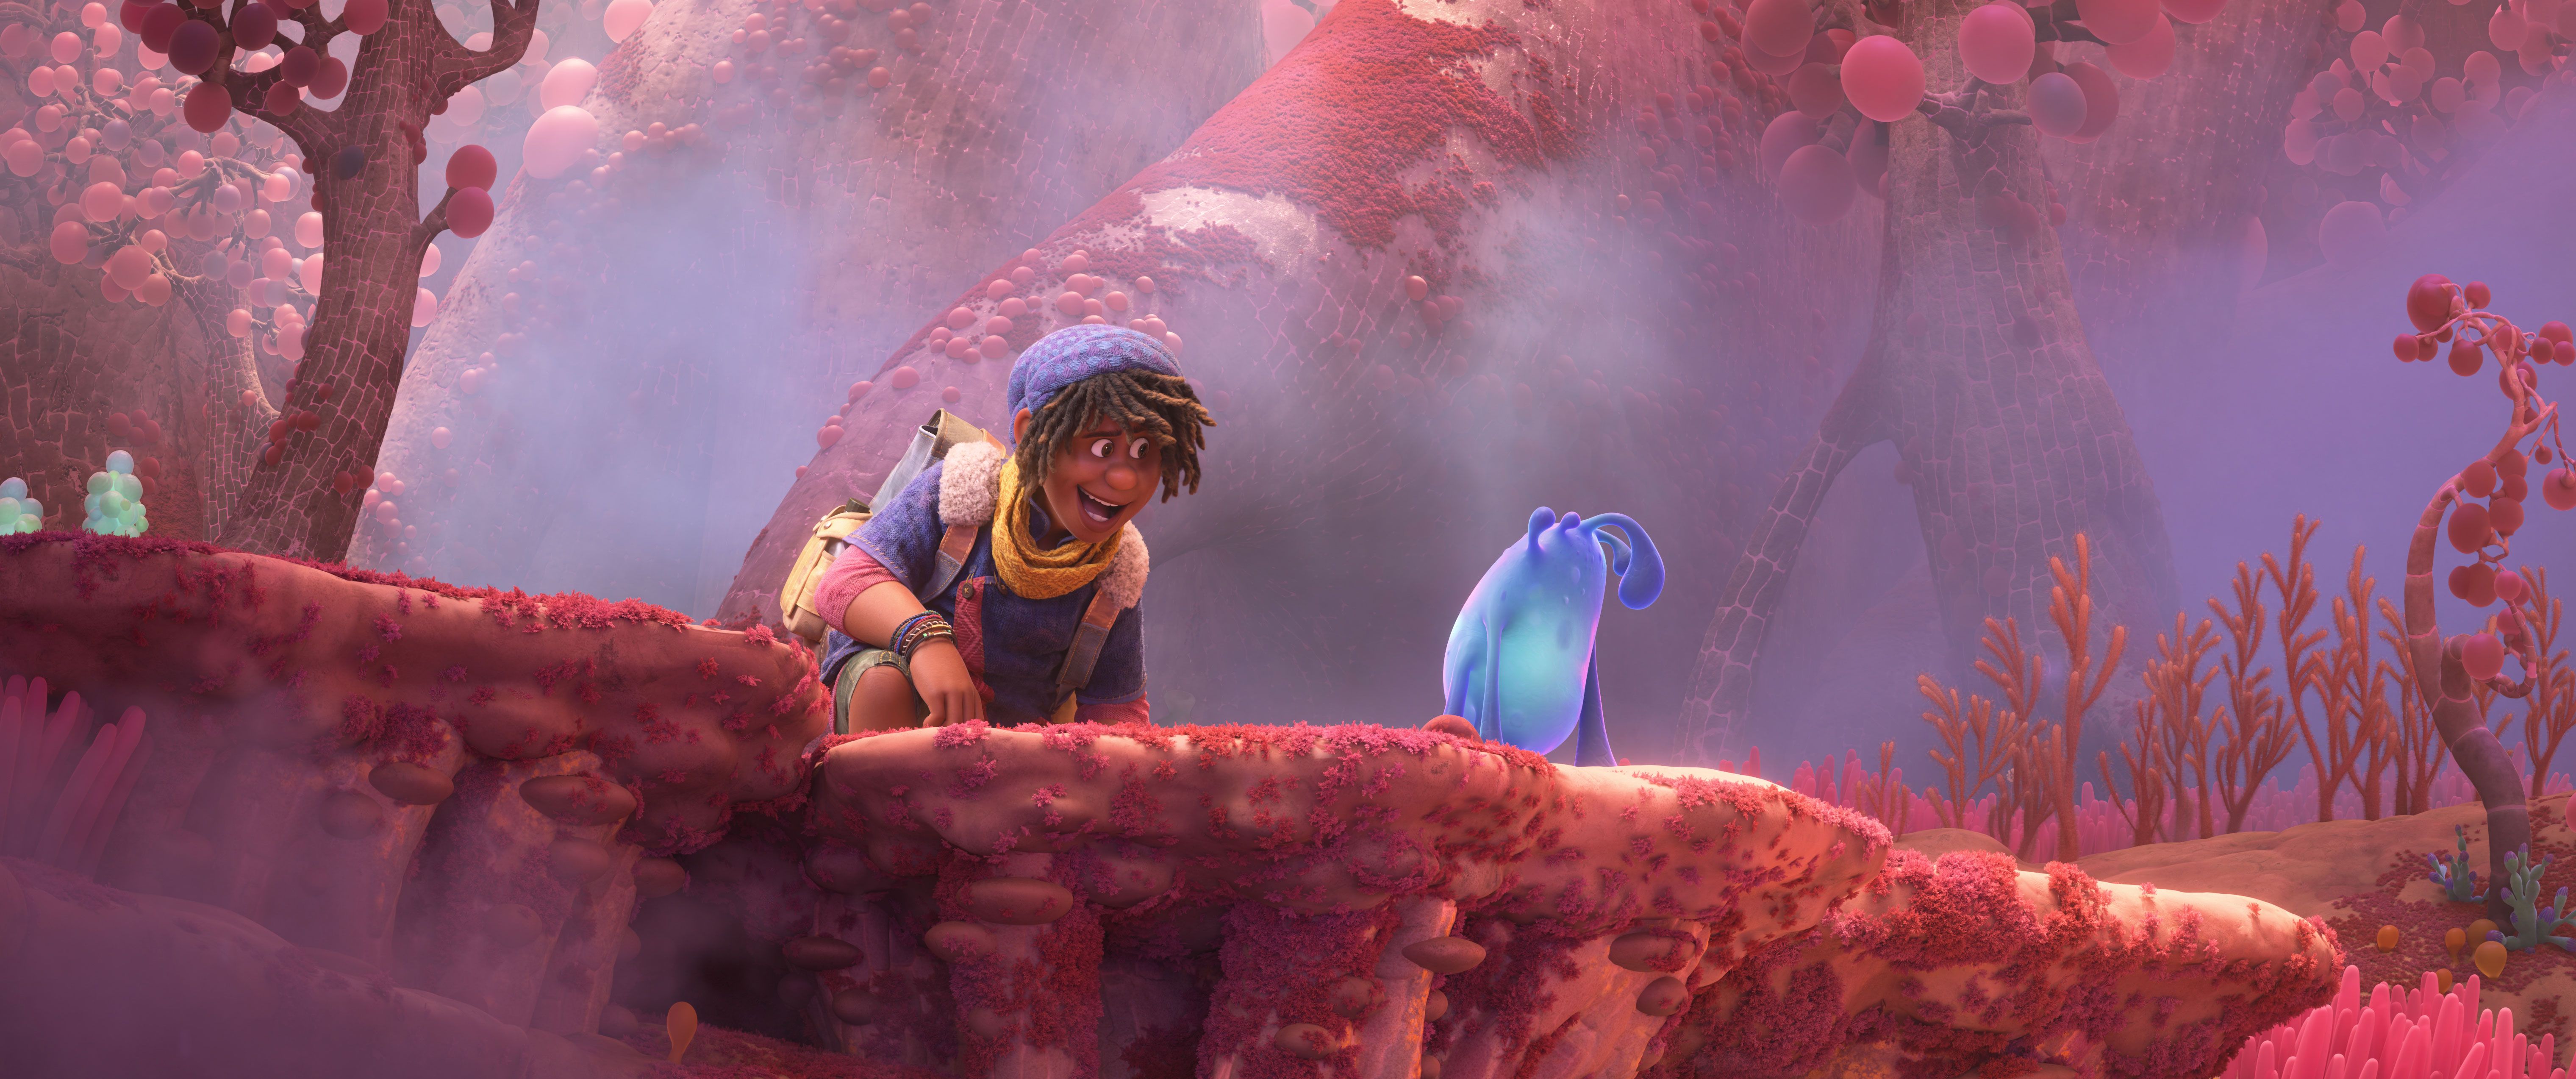 Strange World' Review: Disney's Audacious New Animated Film